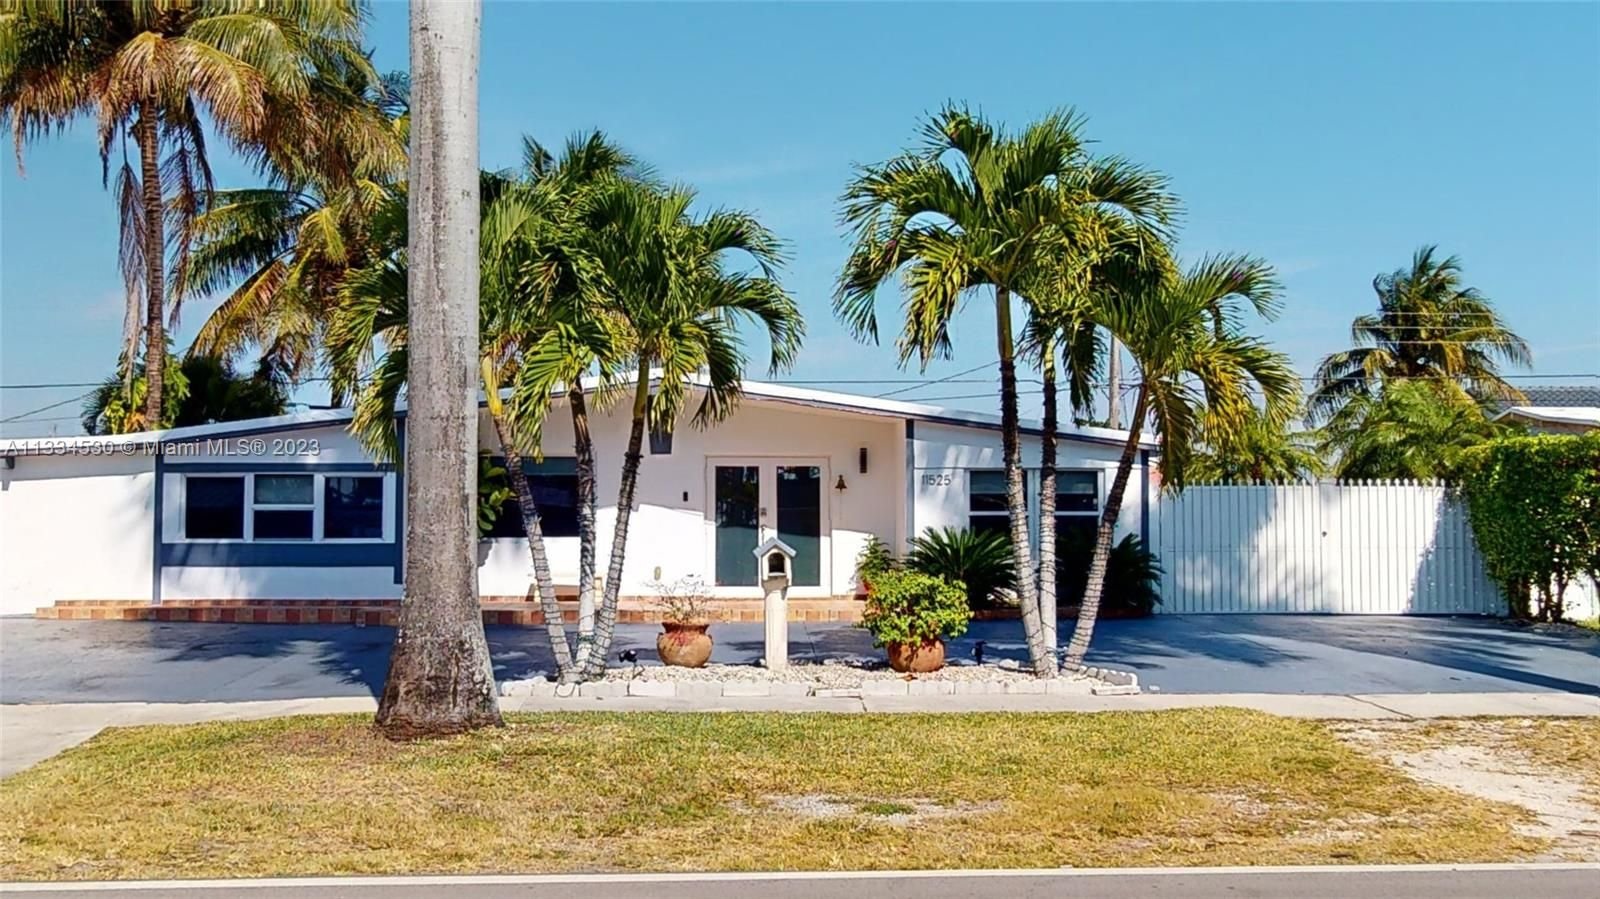 Real estate property located at 11525 47th Ter, Miami-Dade County, Miami, FL